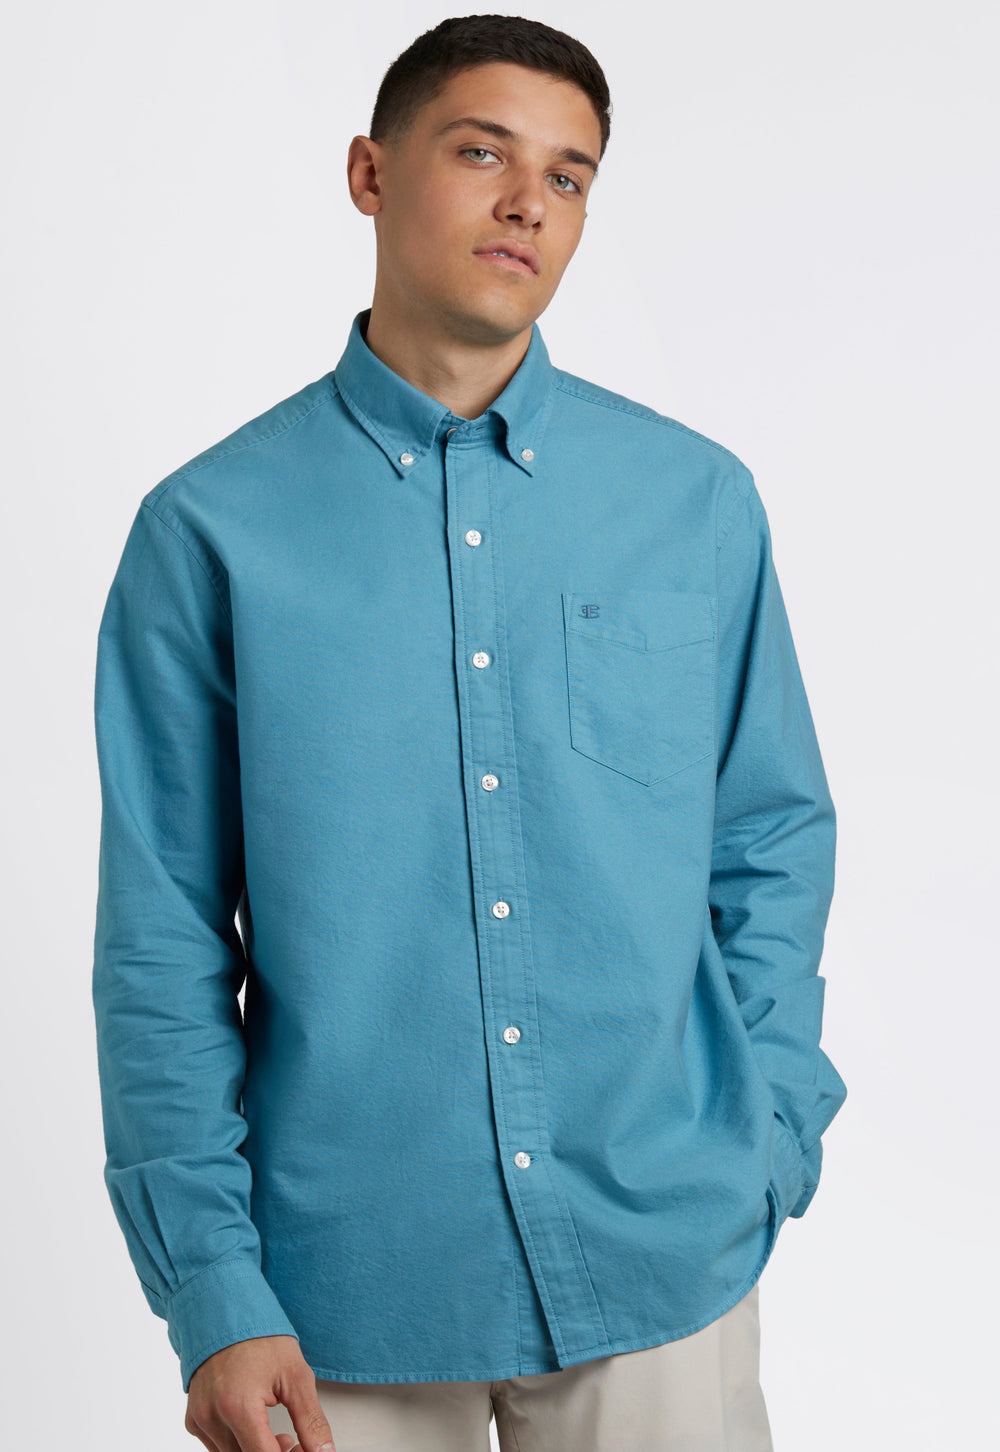 Beatnik Oxford Garment Dye Shirt - Deep Teal Blue